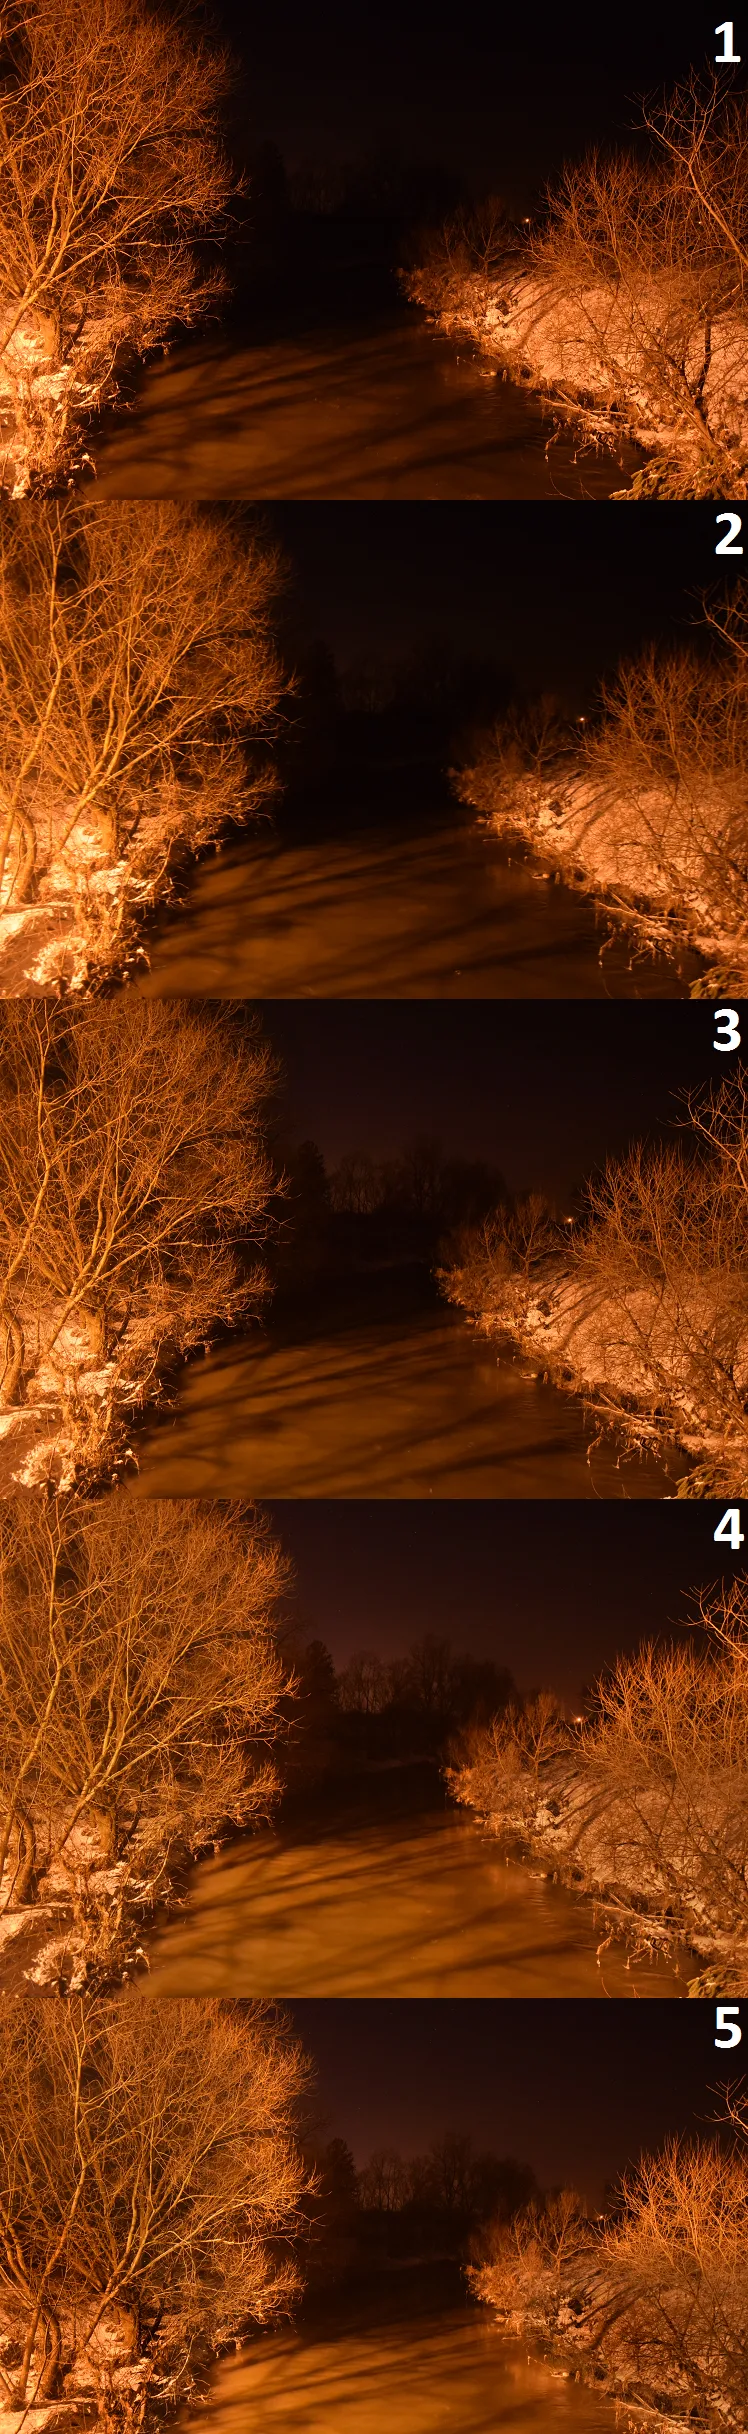 Nikon D5300 HDR in action at night, Odrzykoń Wisłok river